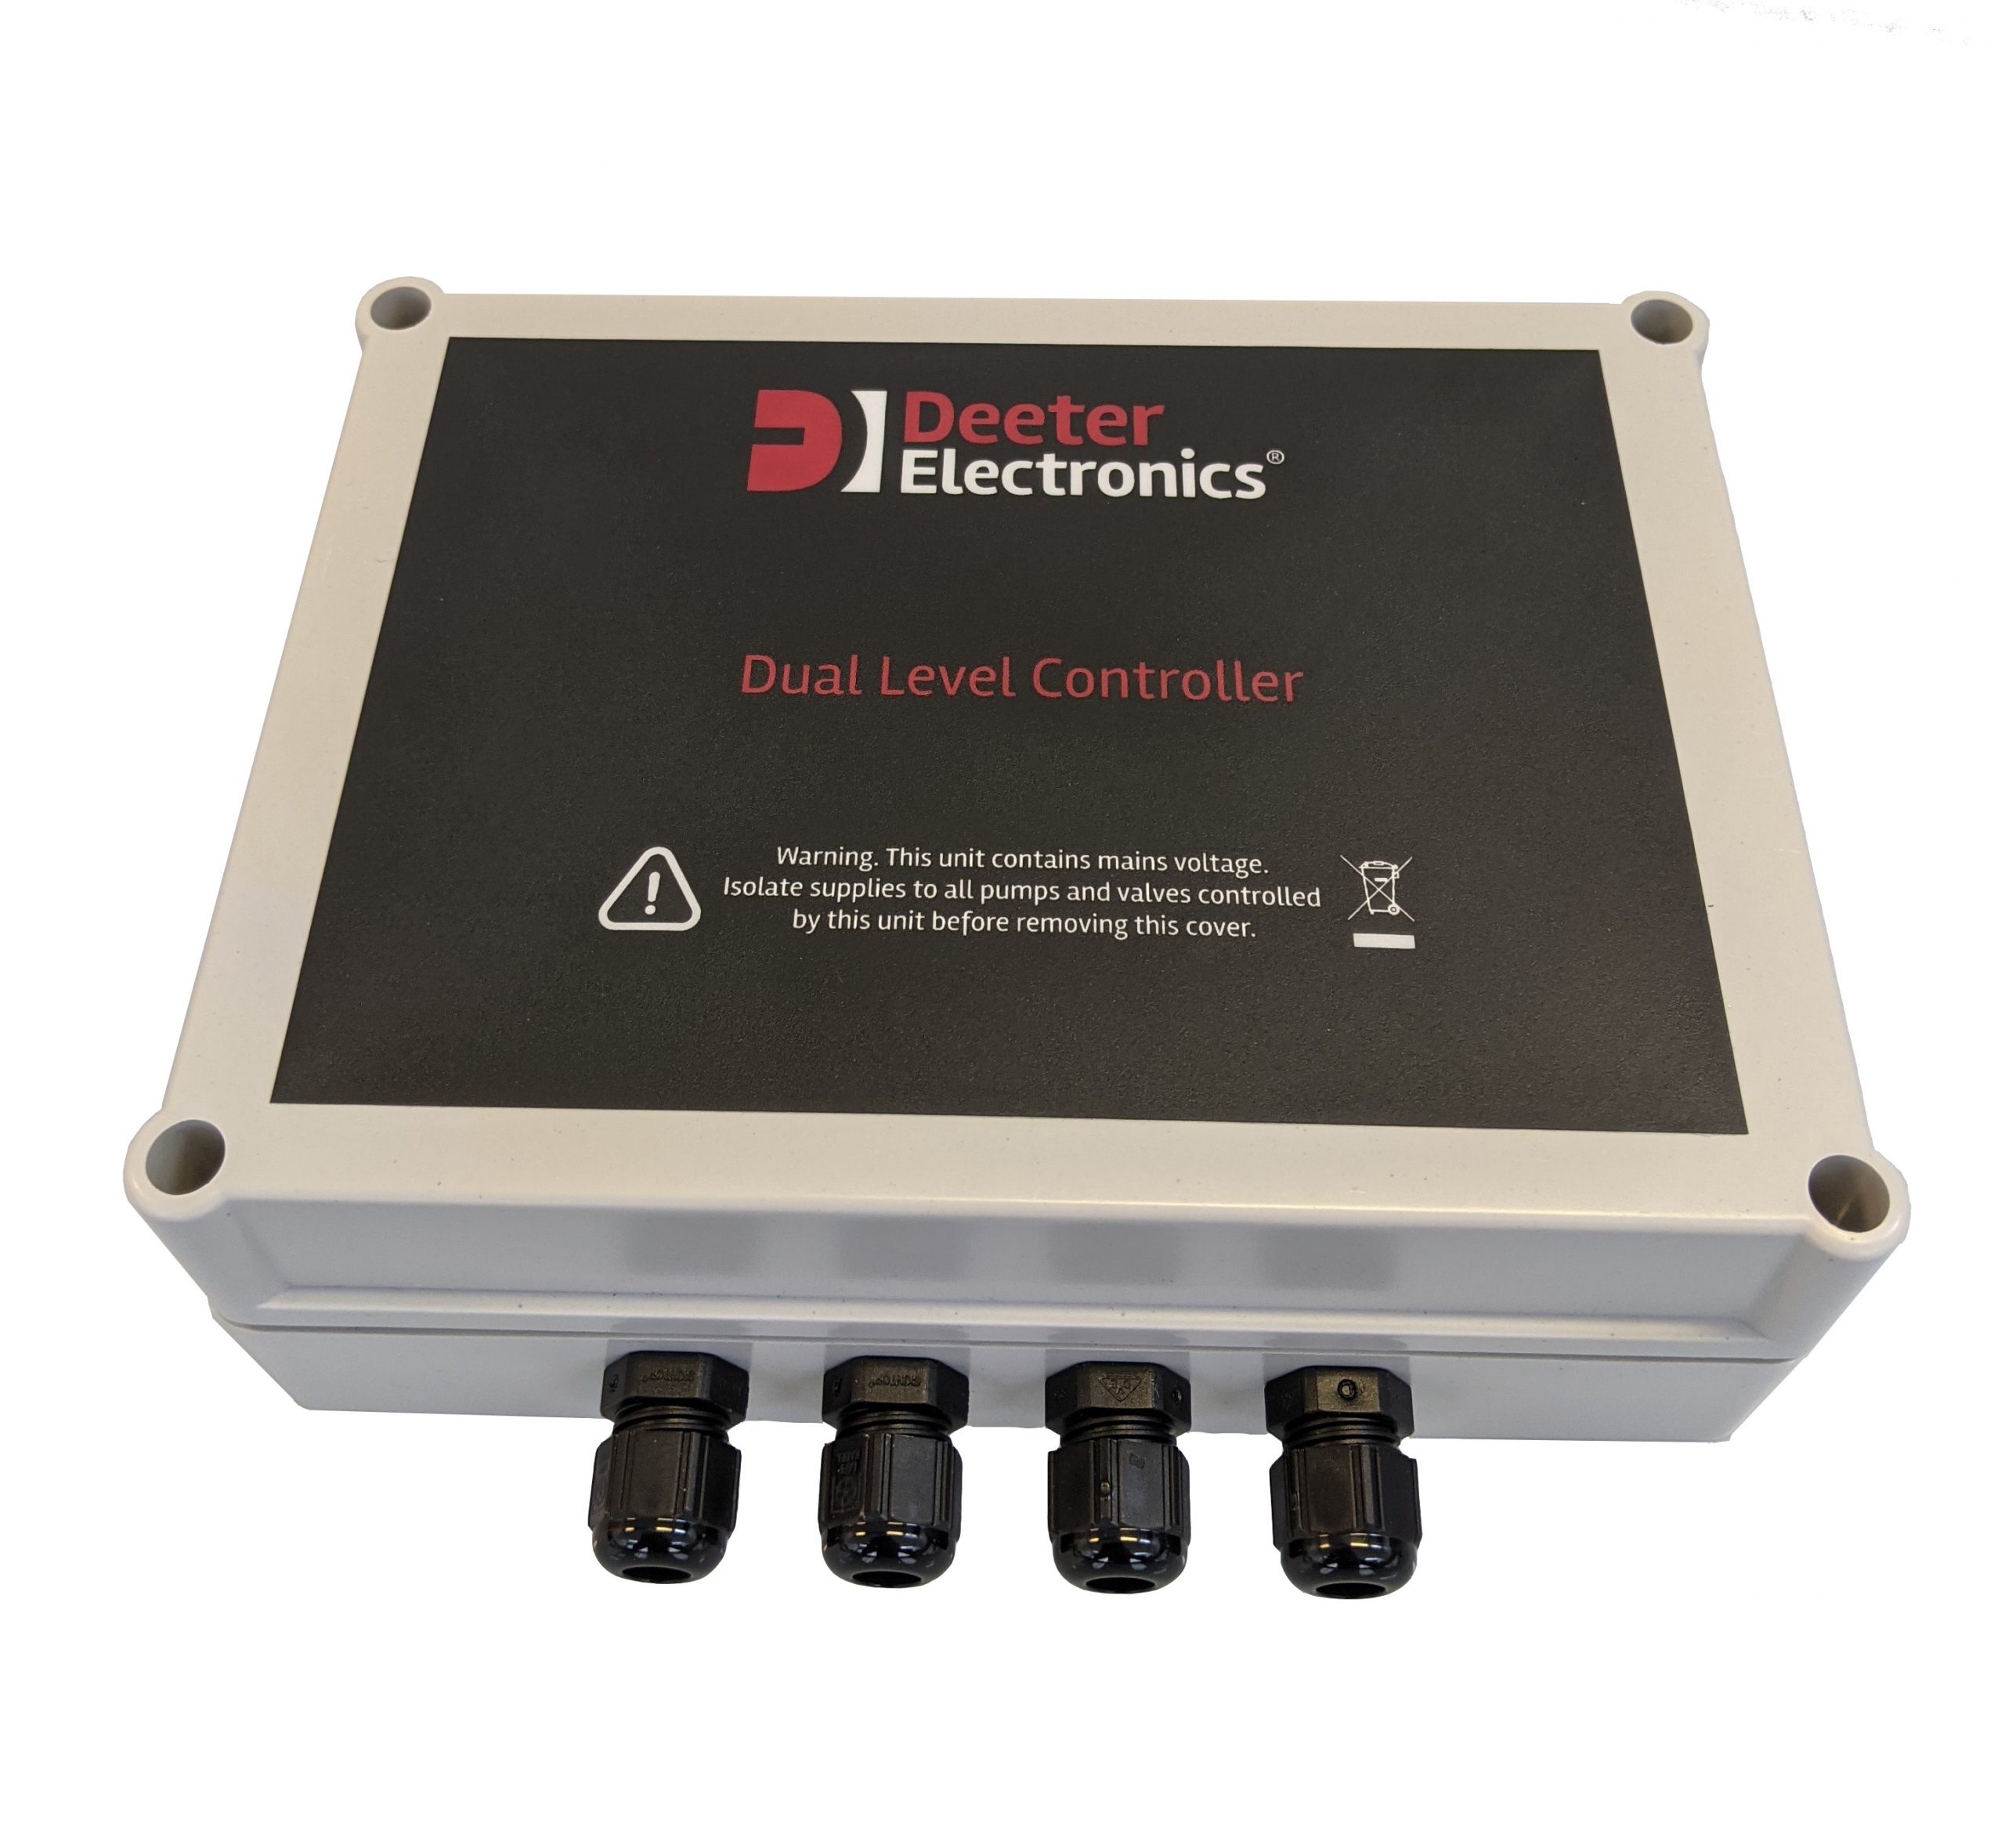 Deeter DLC Series Dual Level Controllers